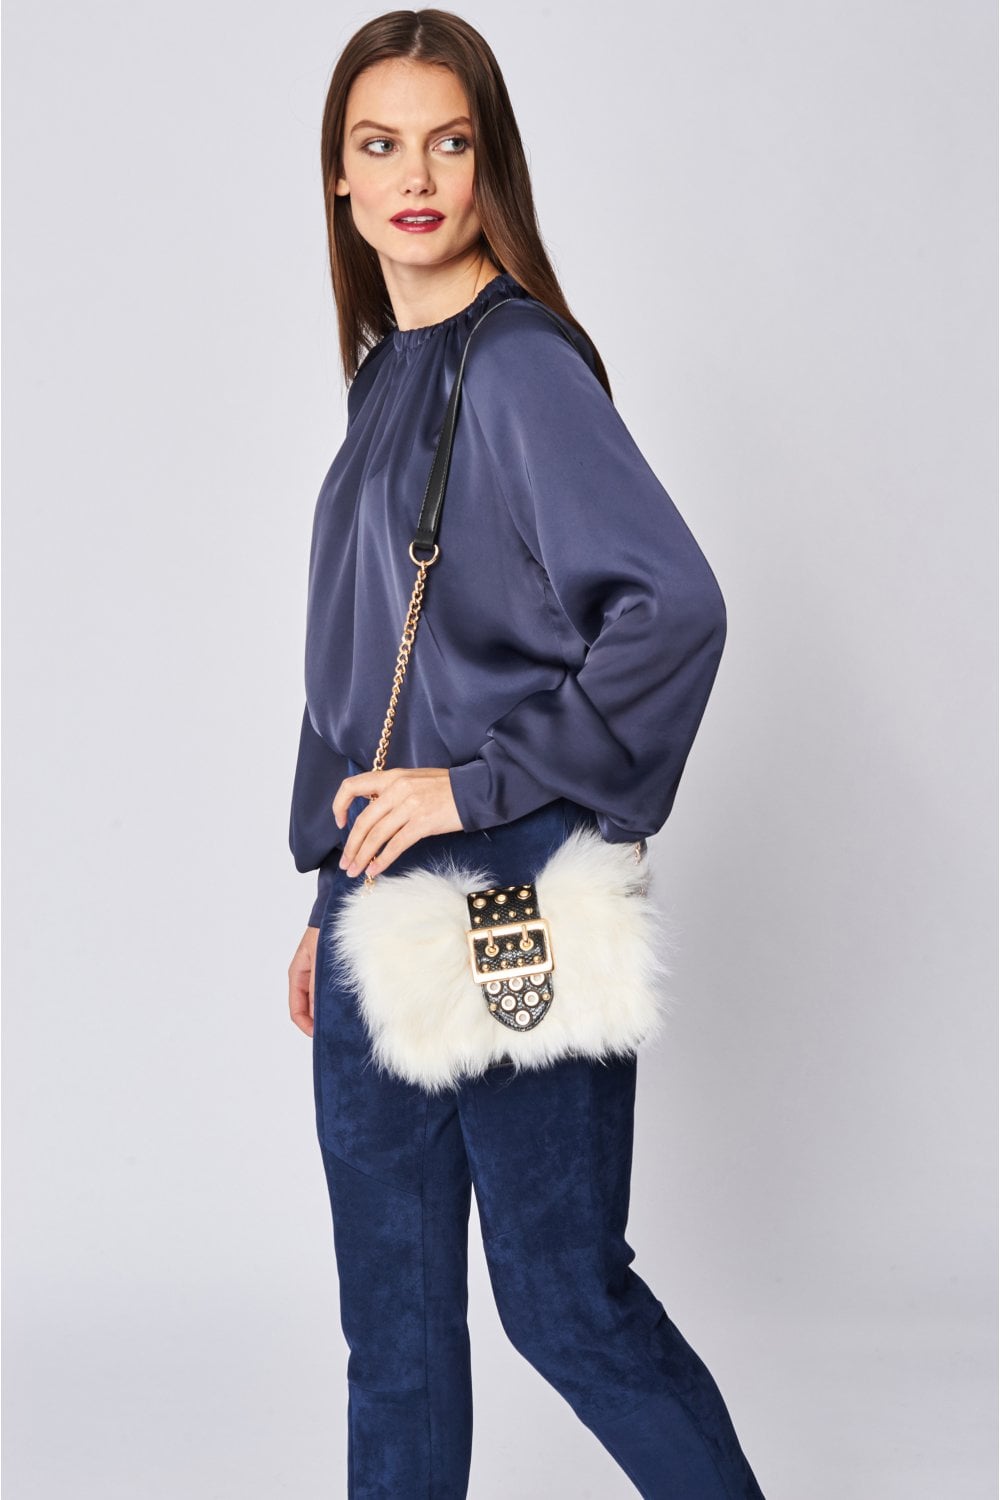 Fox Fur and Real Leather Bag - paulamariecollection